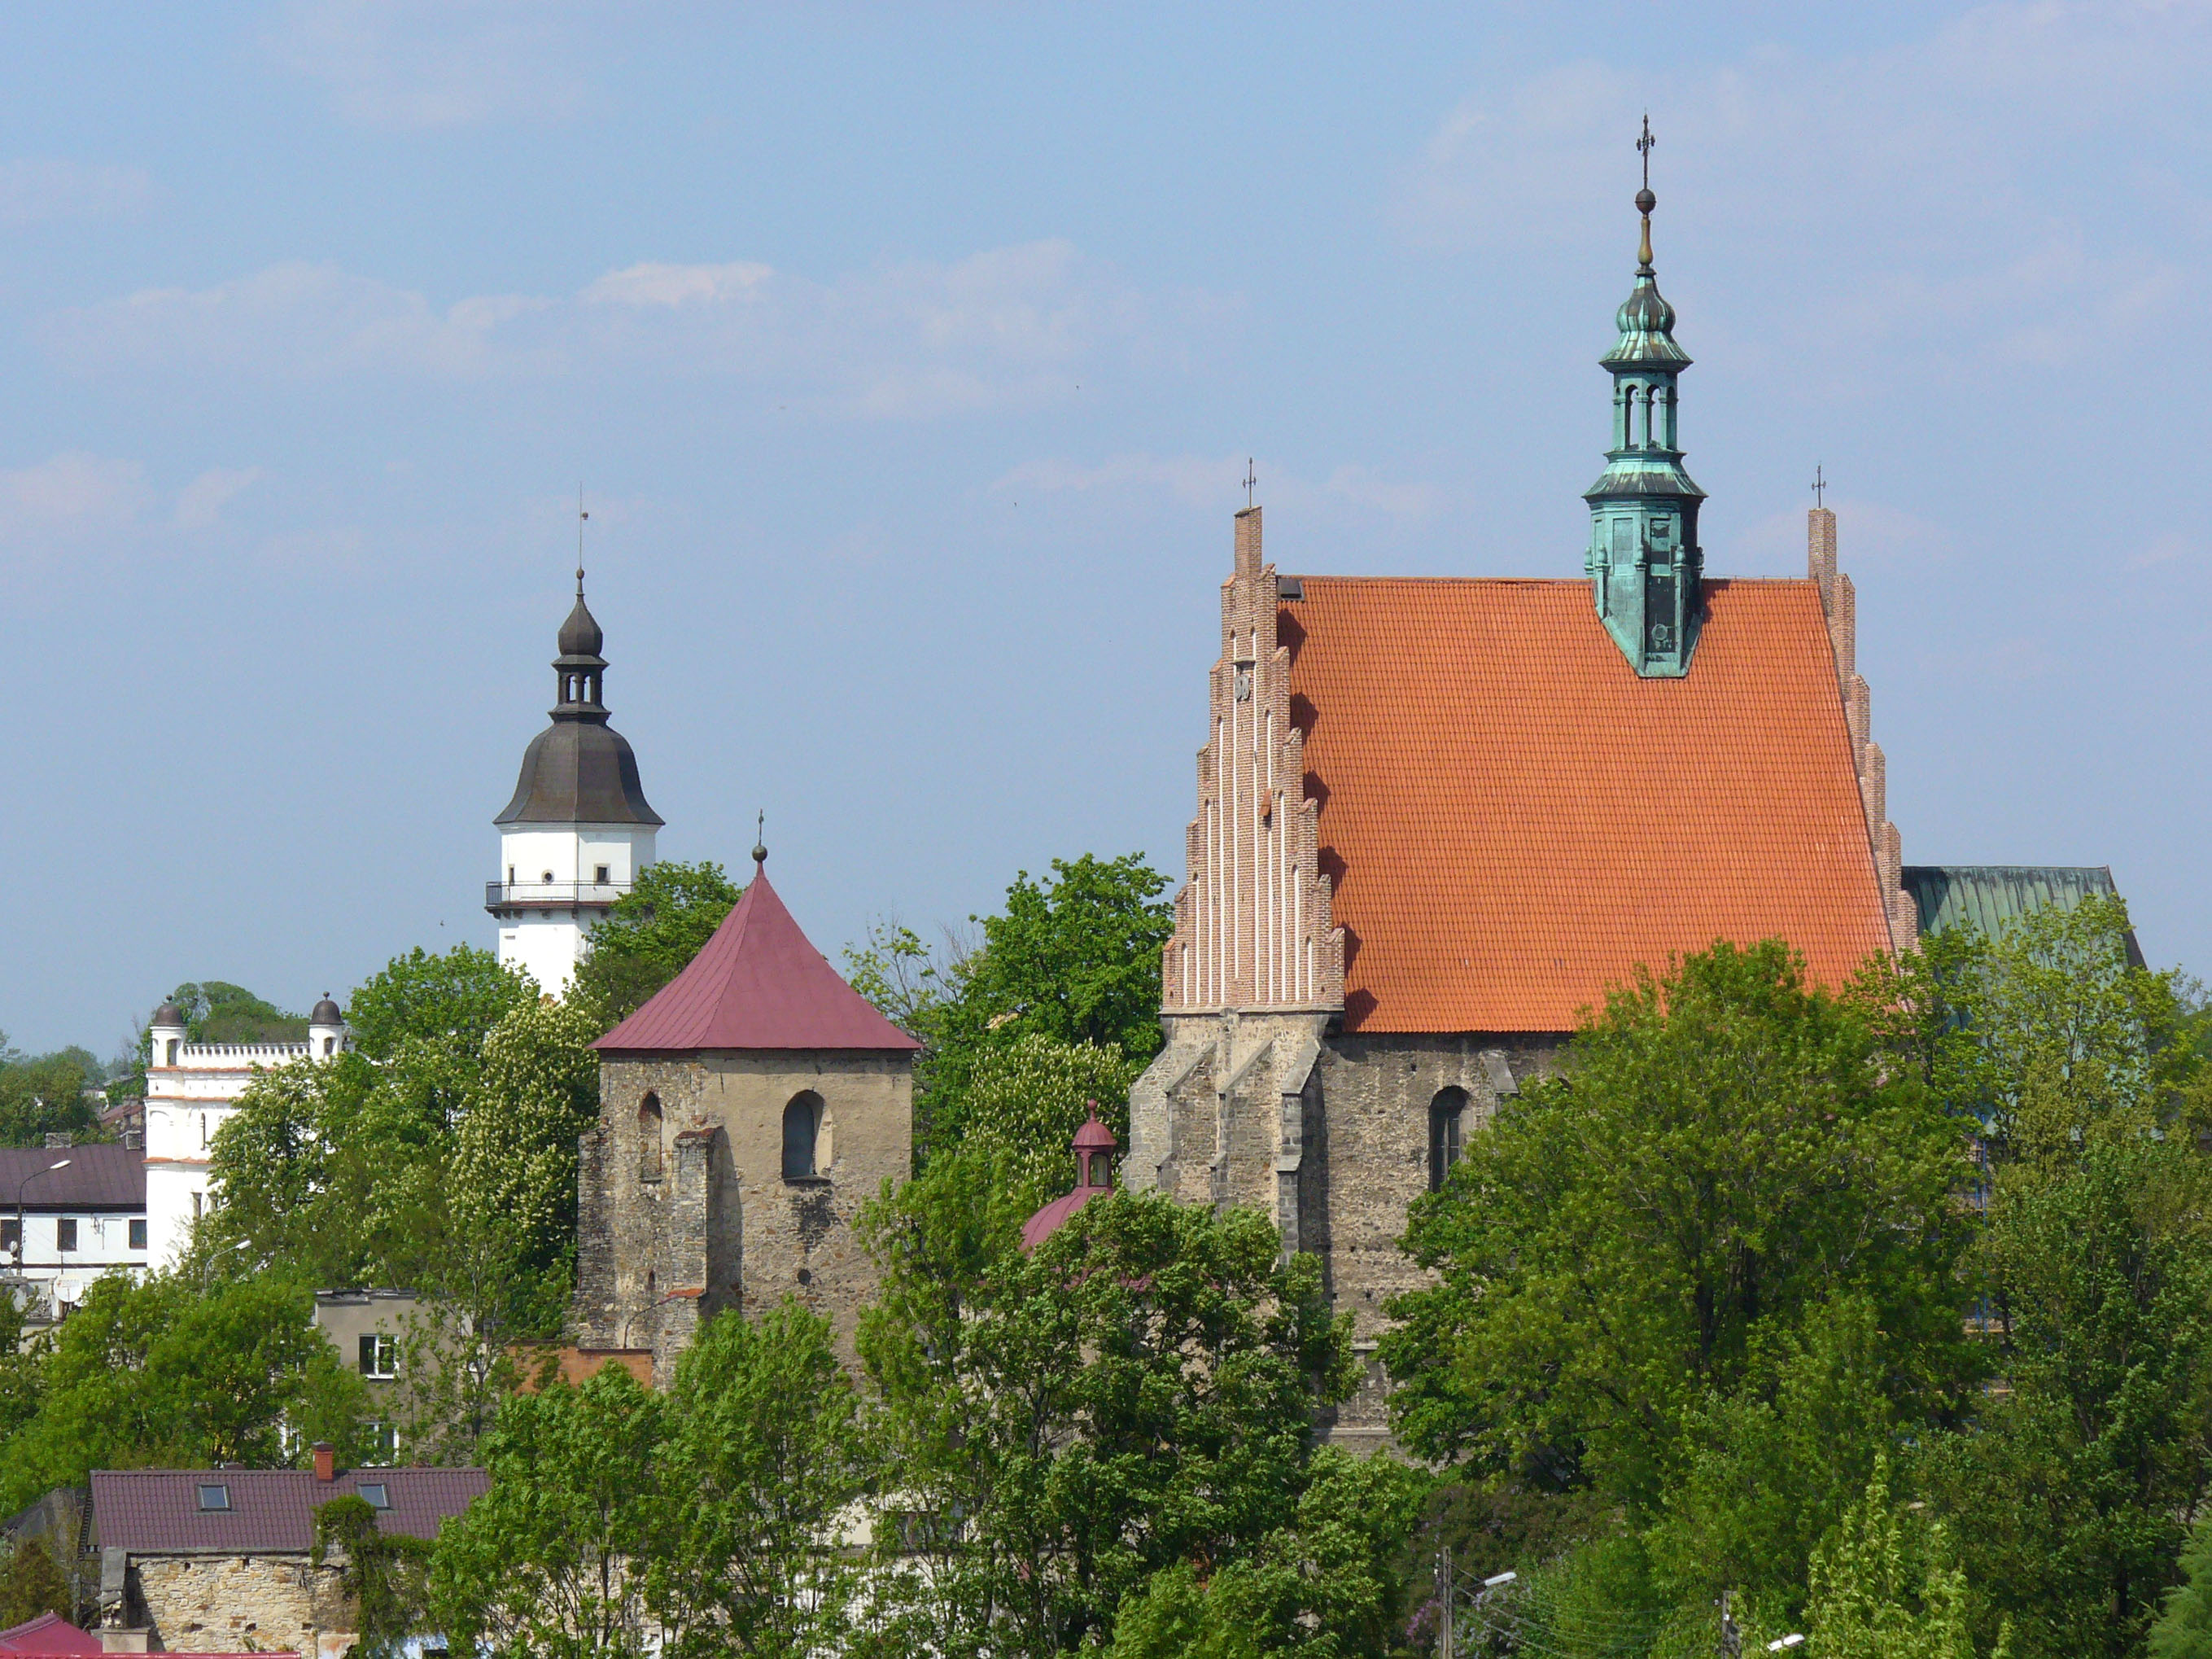 Szydlowiec church town hall edited